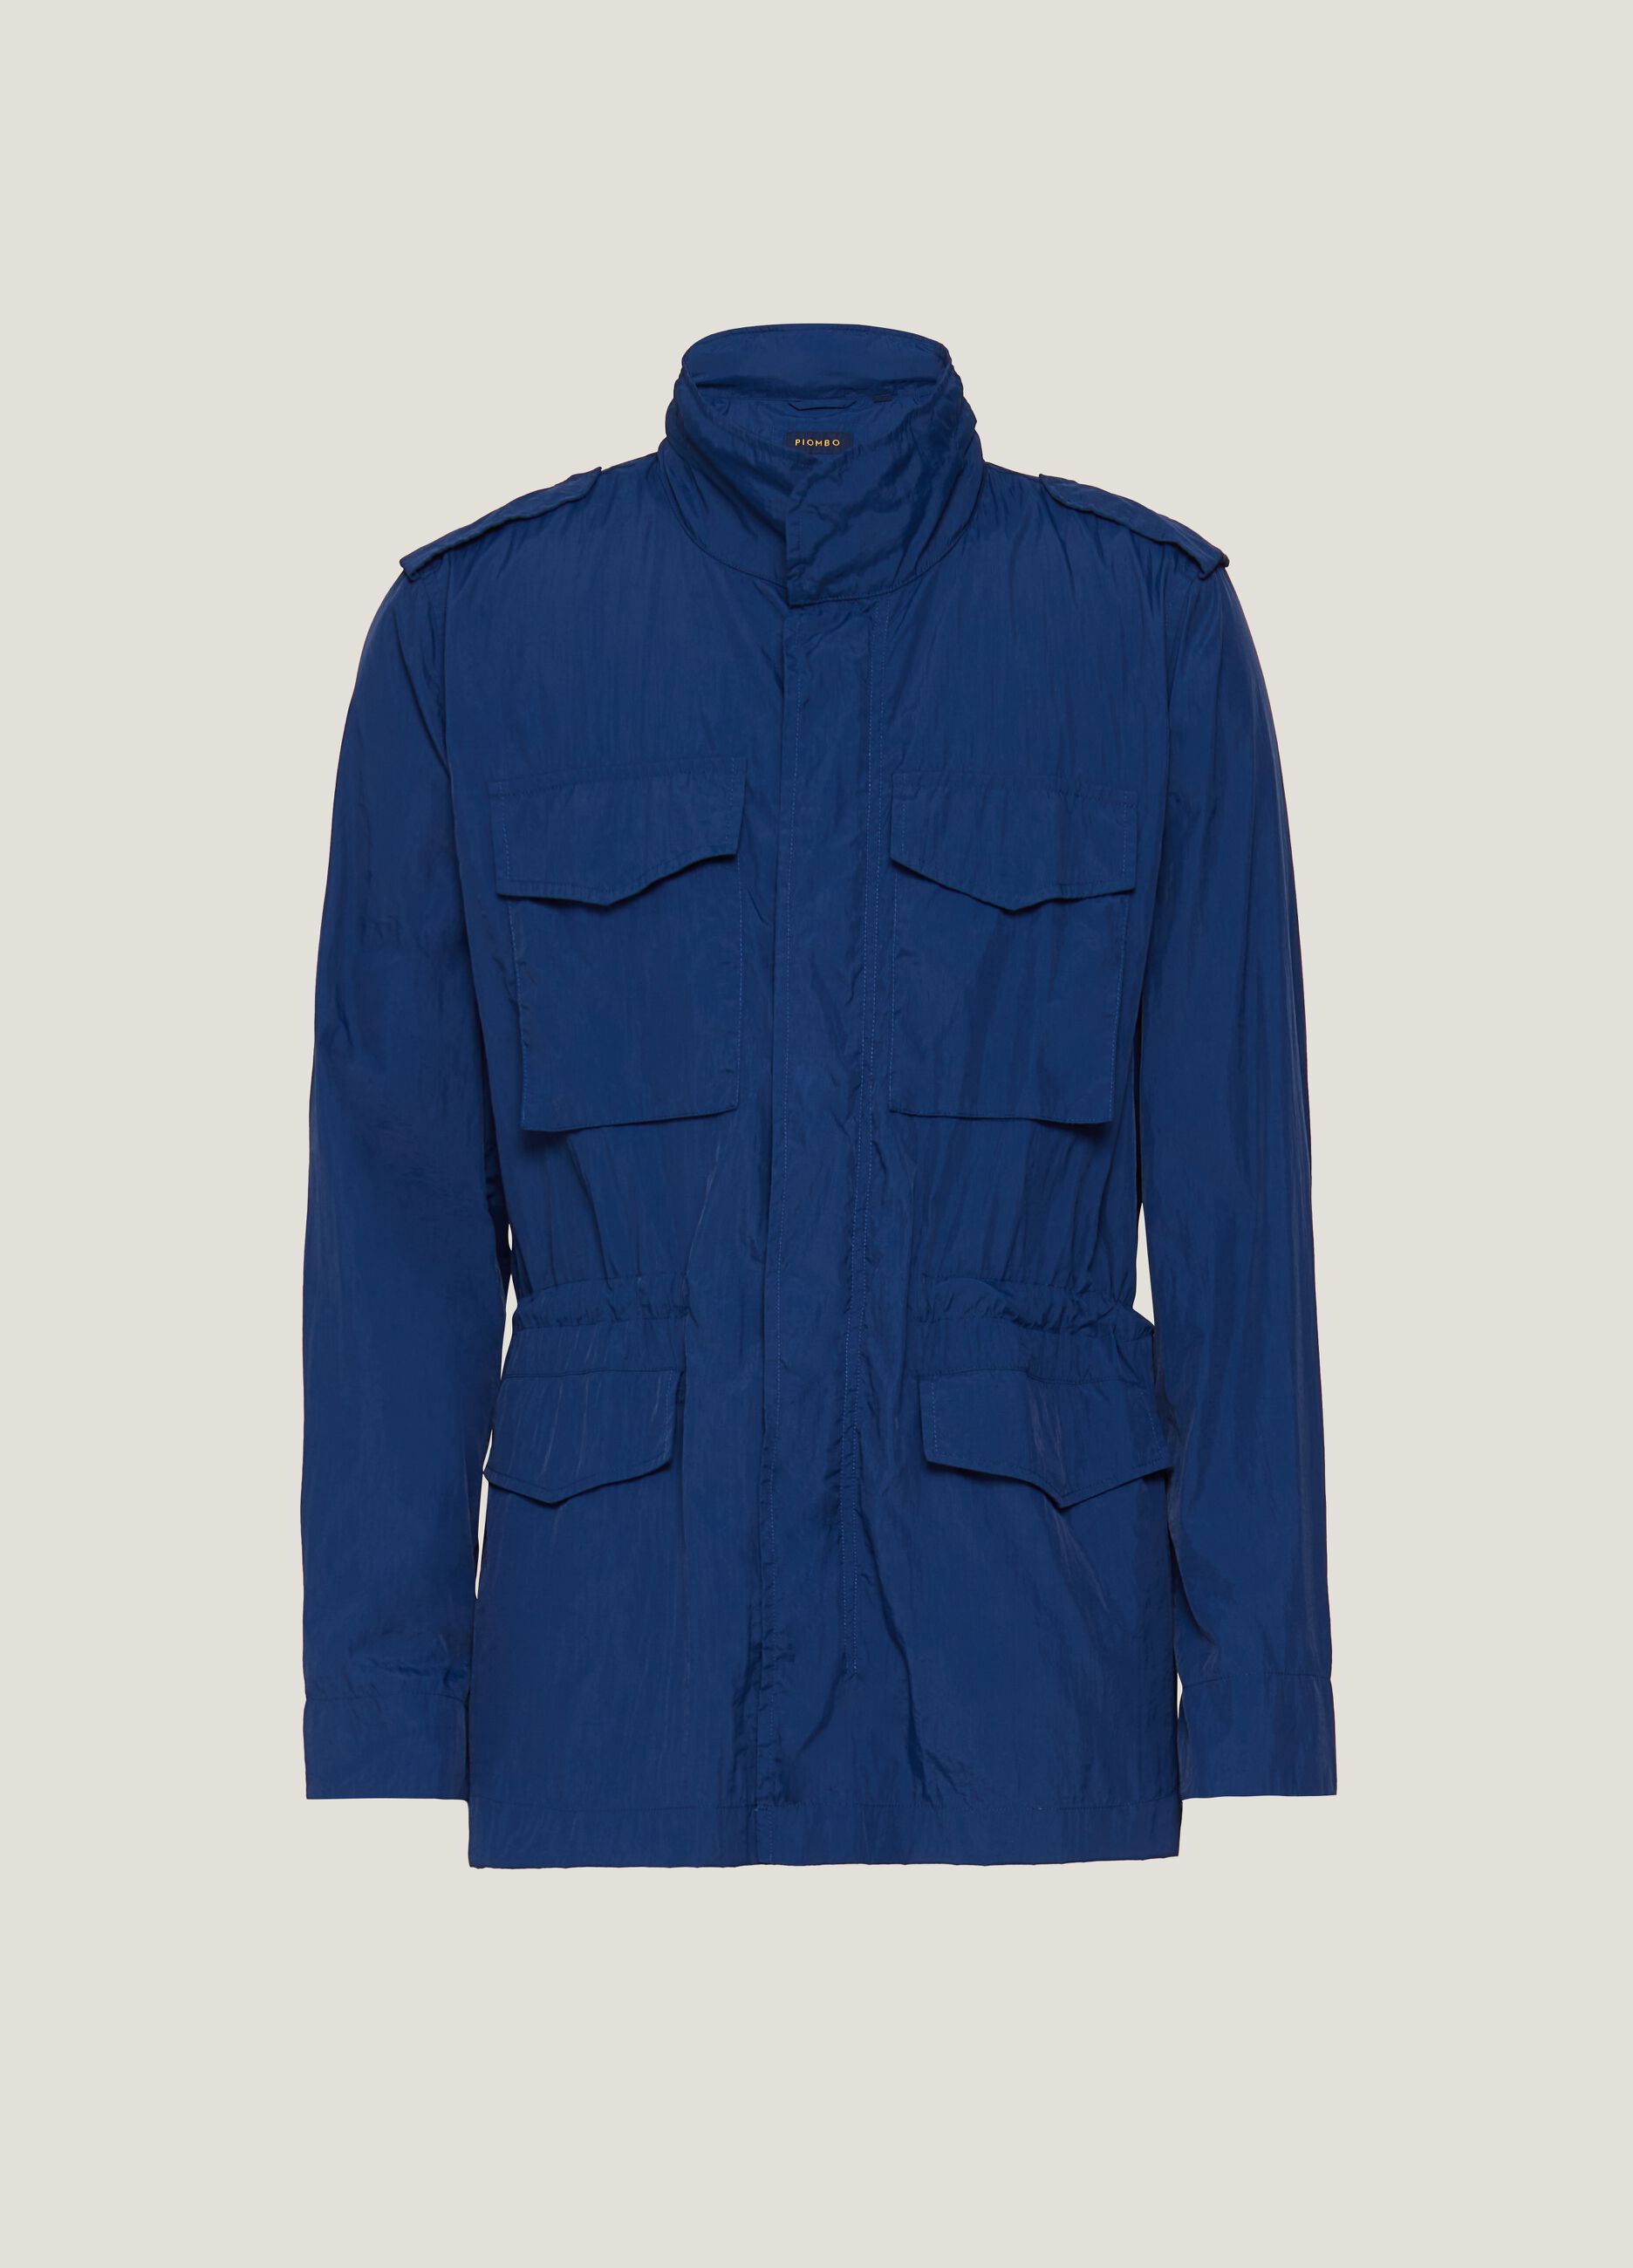 PIOMBO Man's Ocean Blue Safari jacket with hood | OVS